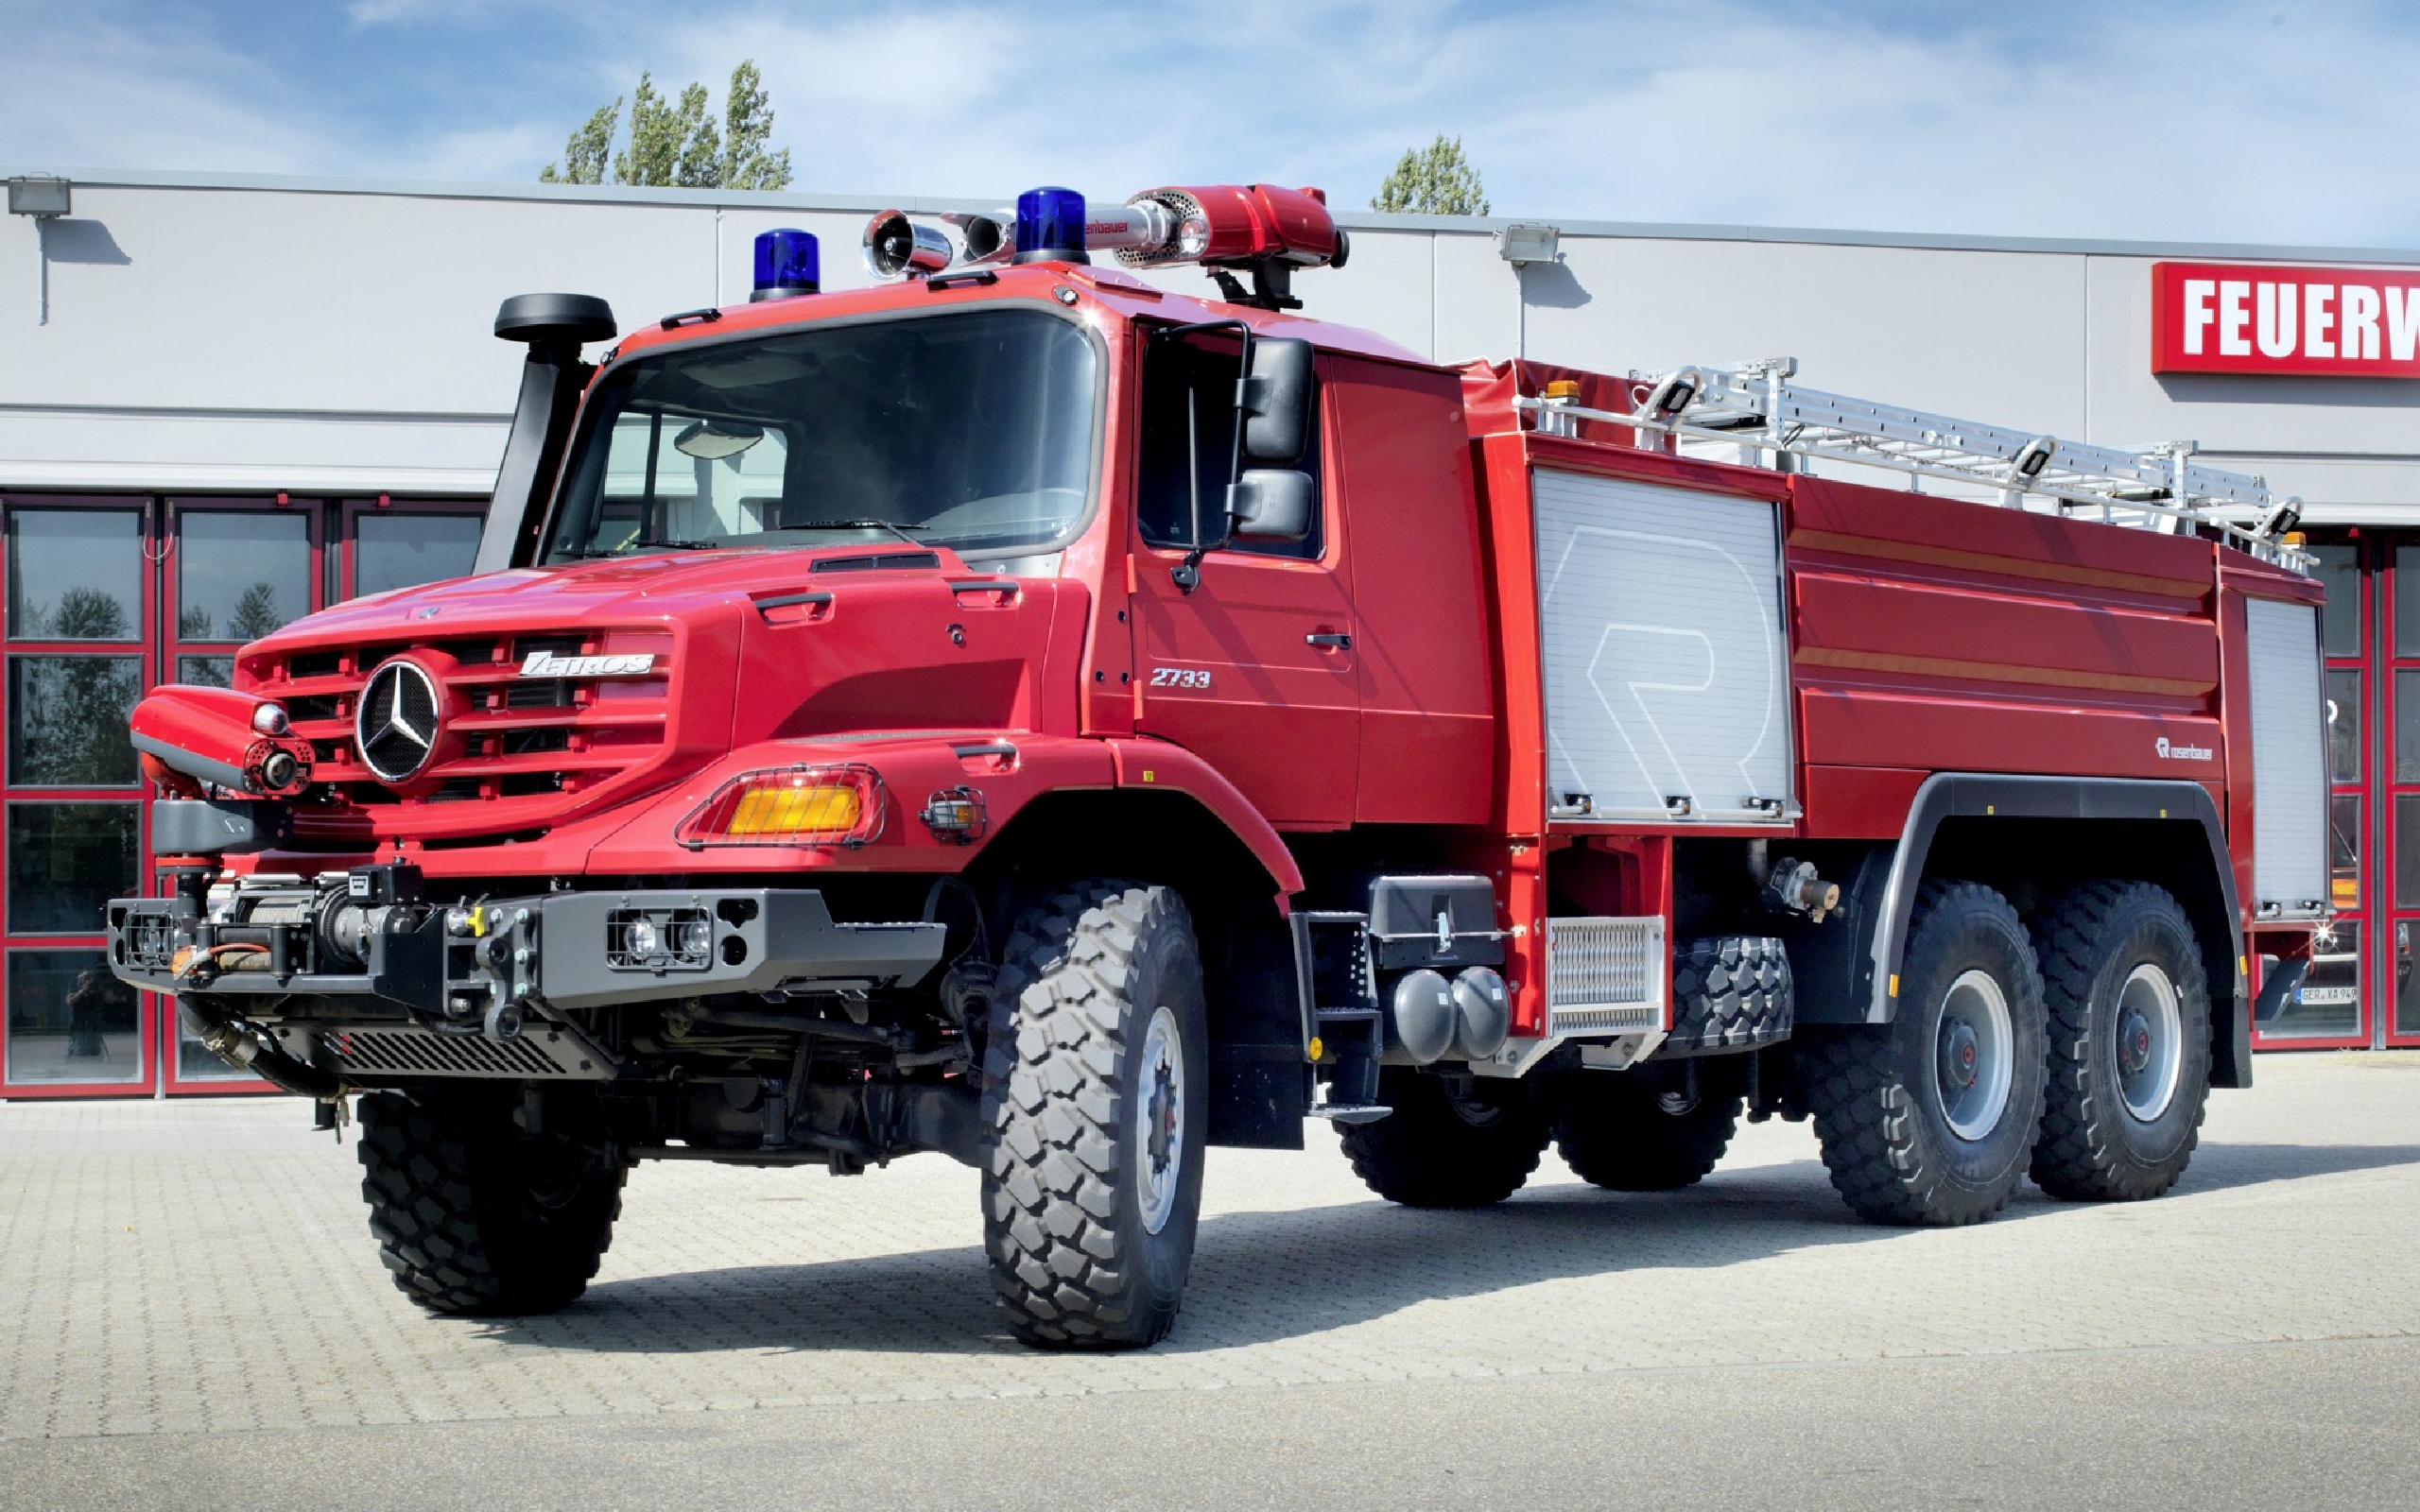 Benz Fire Truck Veh Culo Cami N De Bomberos Engine